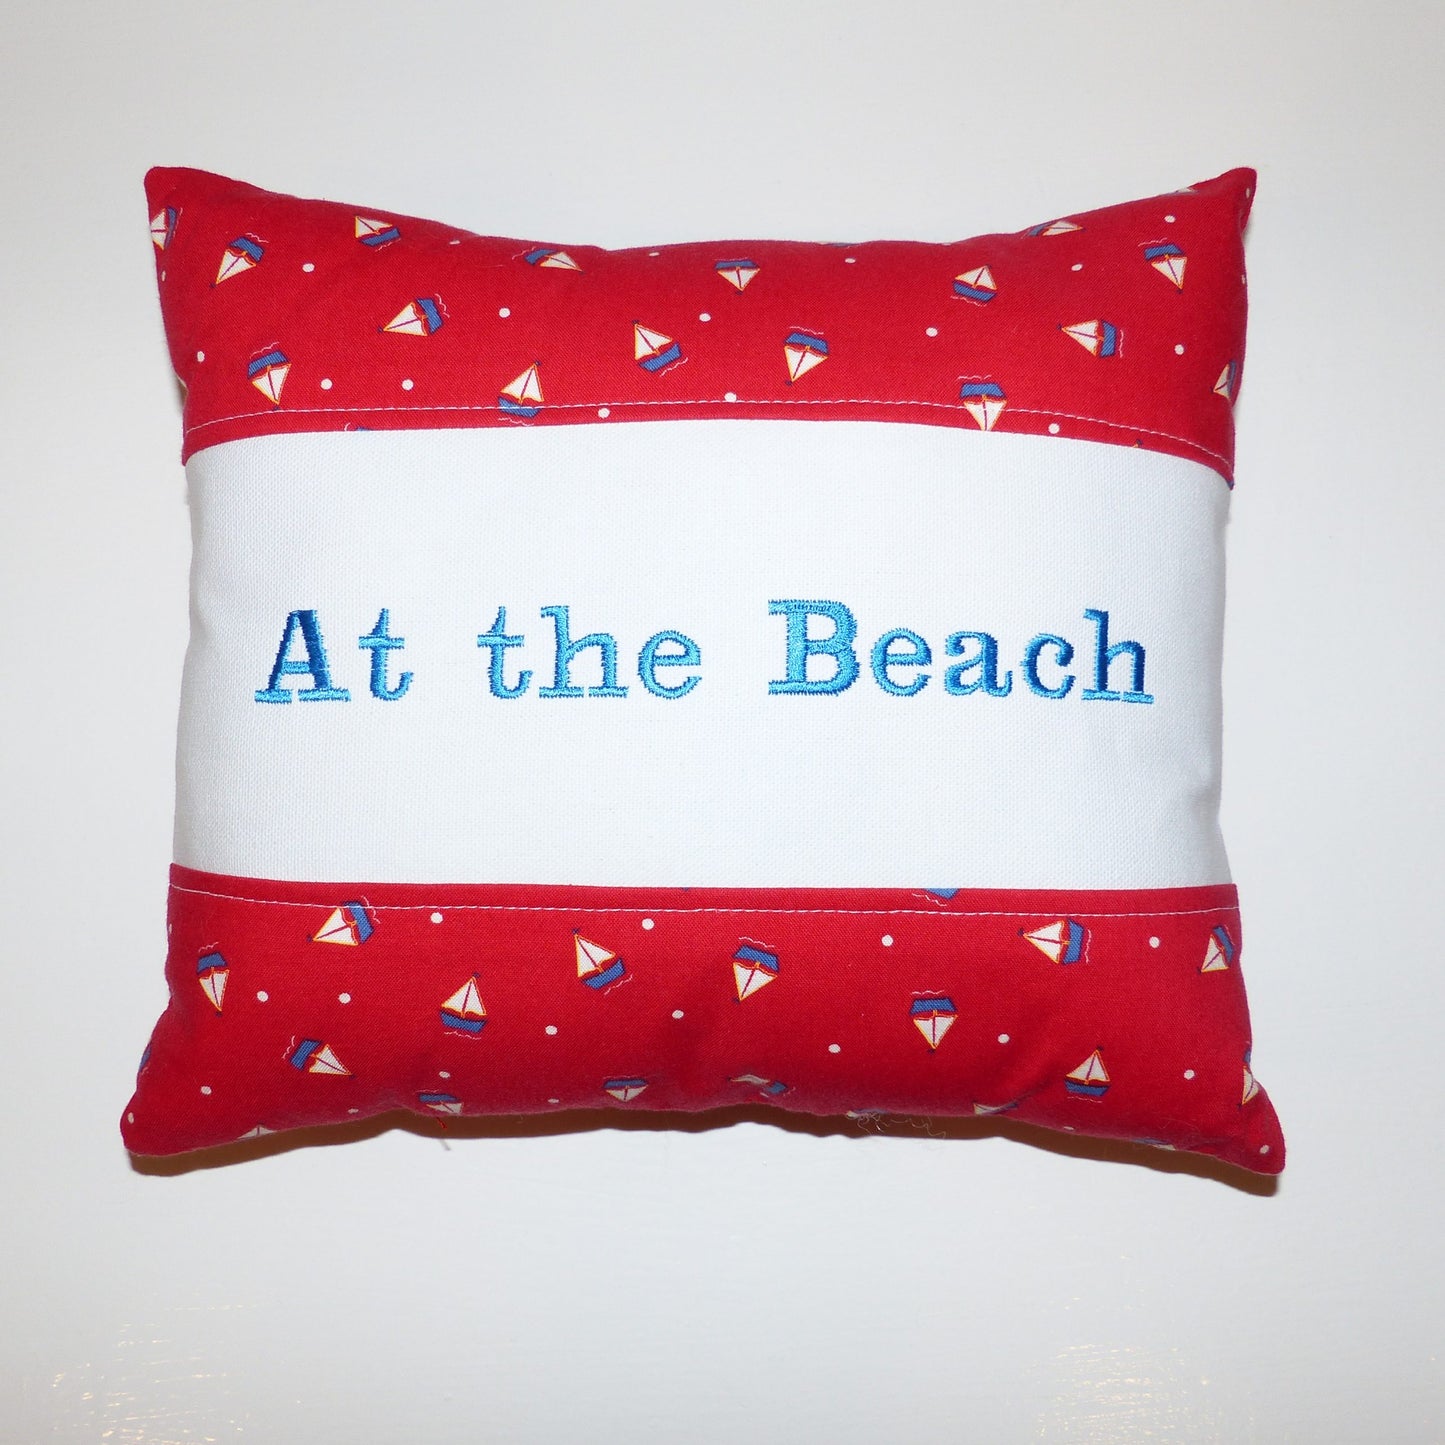 At the Beach Throw Pillow by Christine Hartman